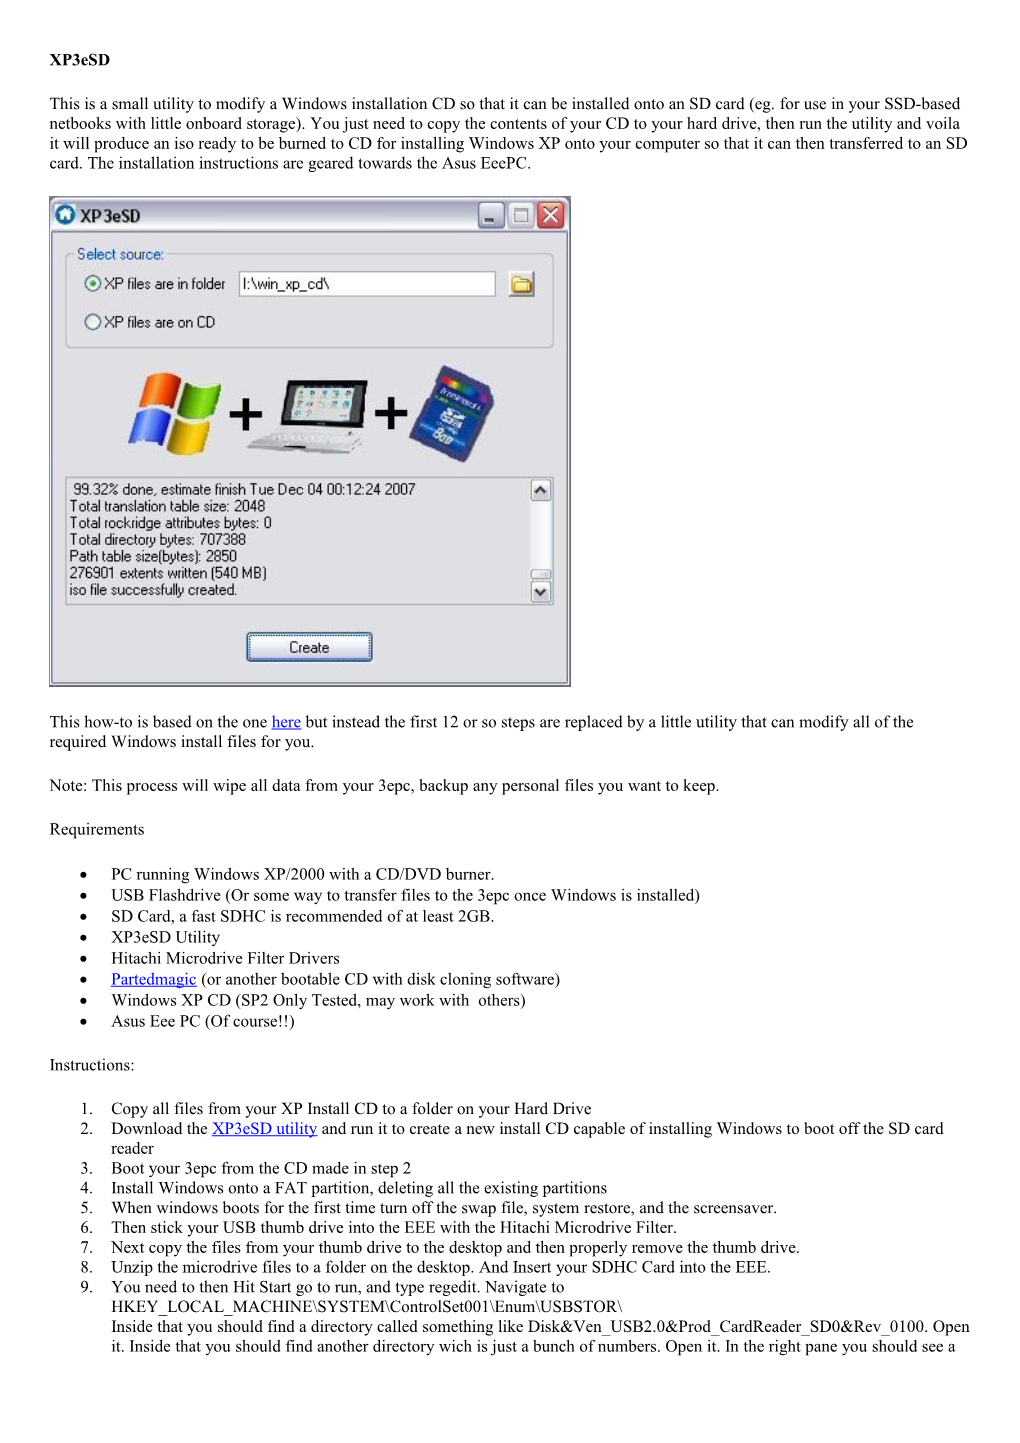 PC Running Windows XP/2000 with a CD/DVD Burner